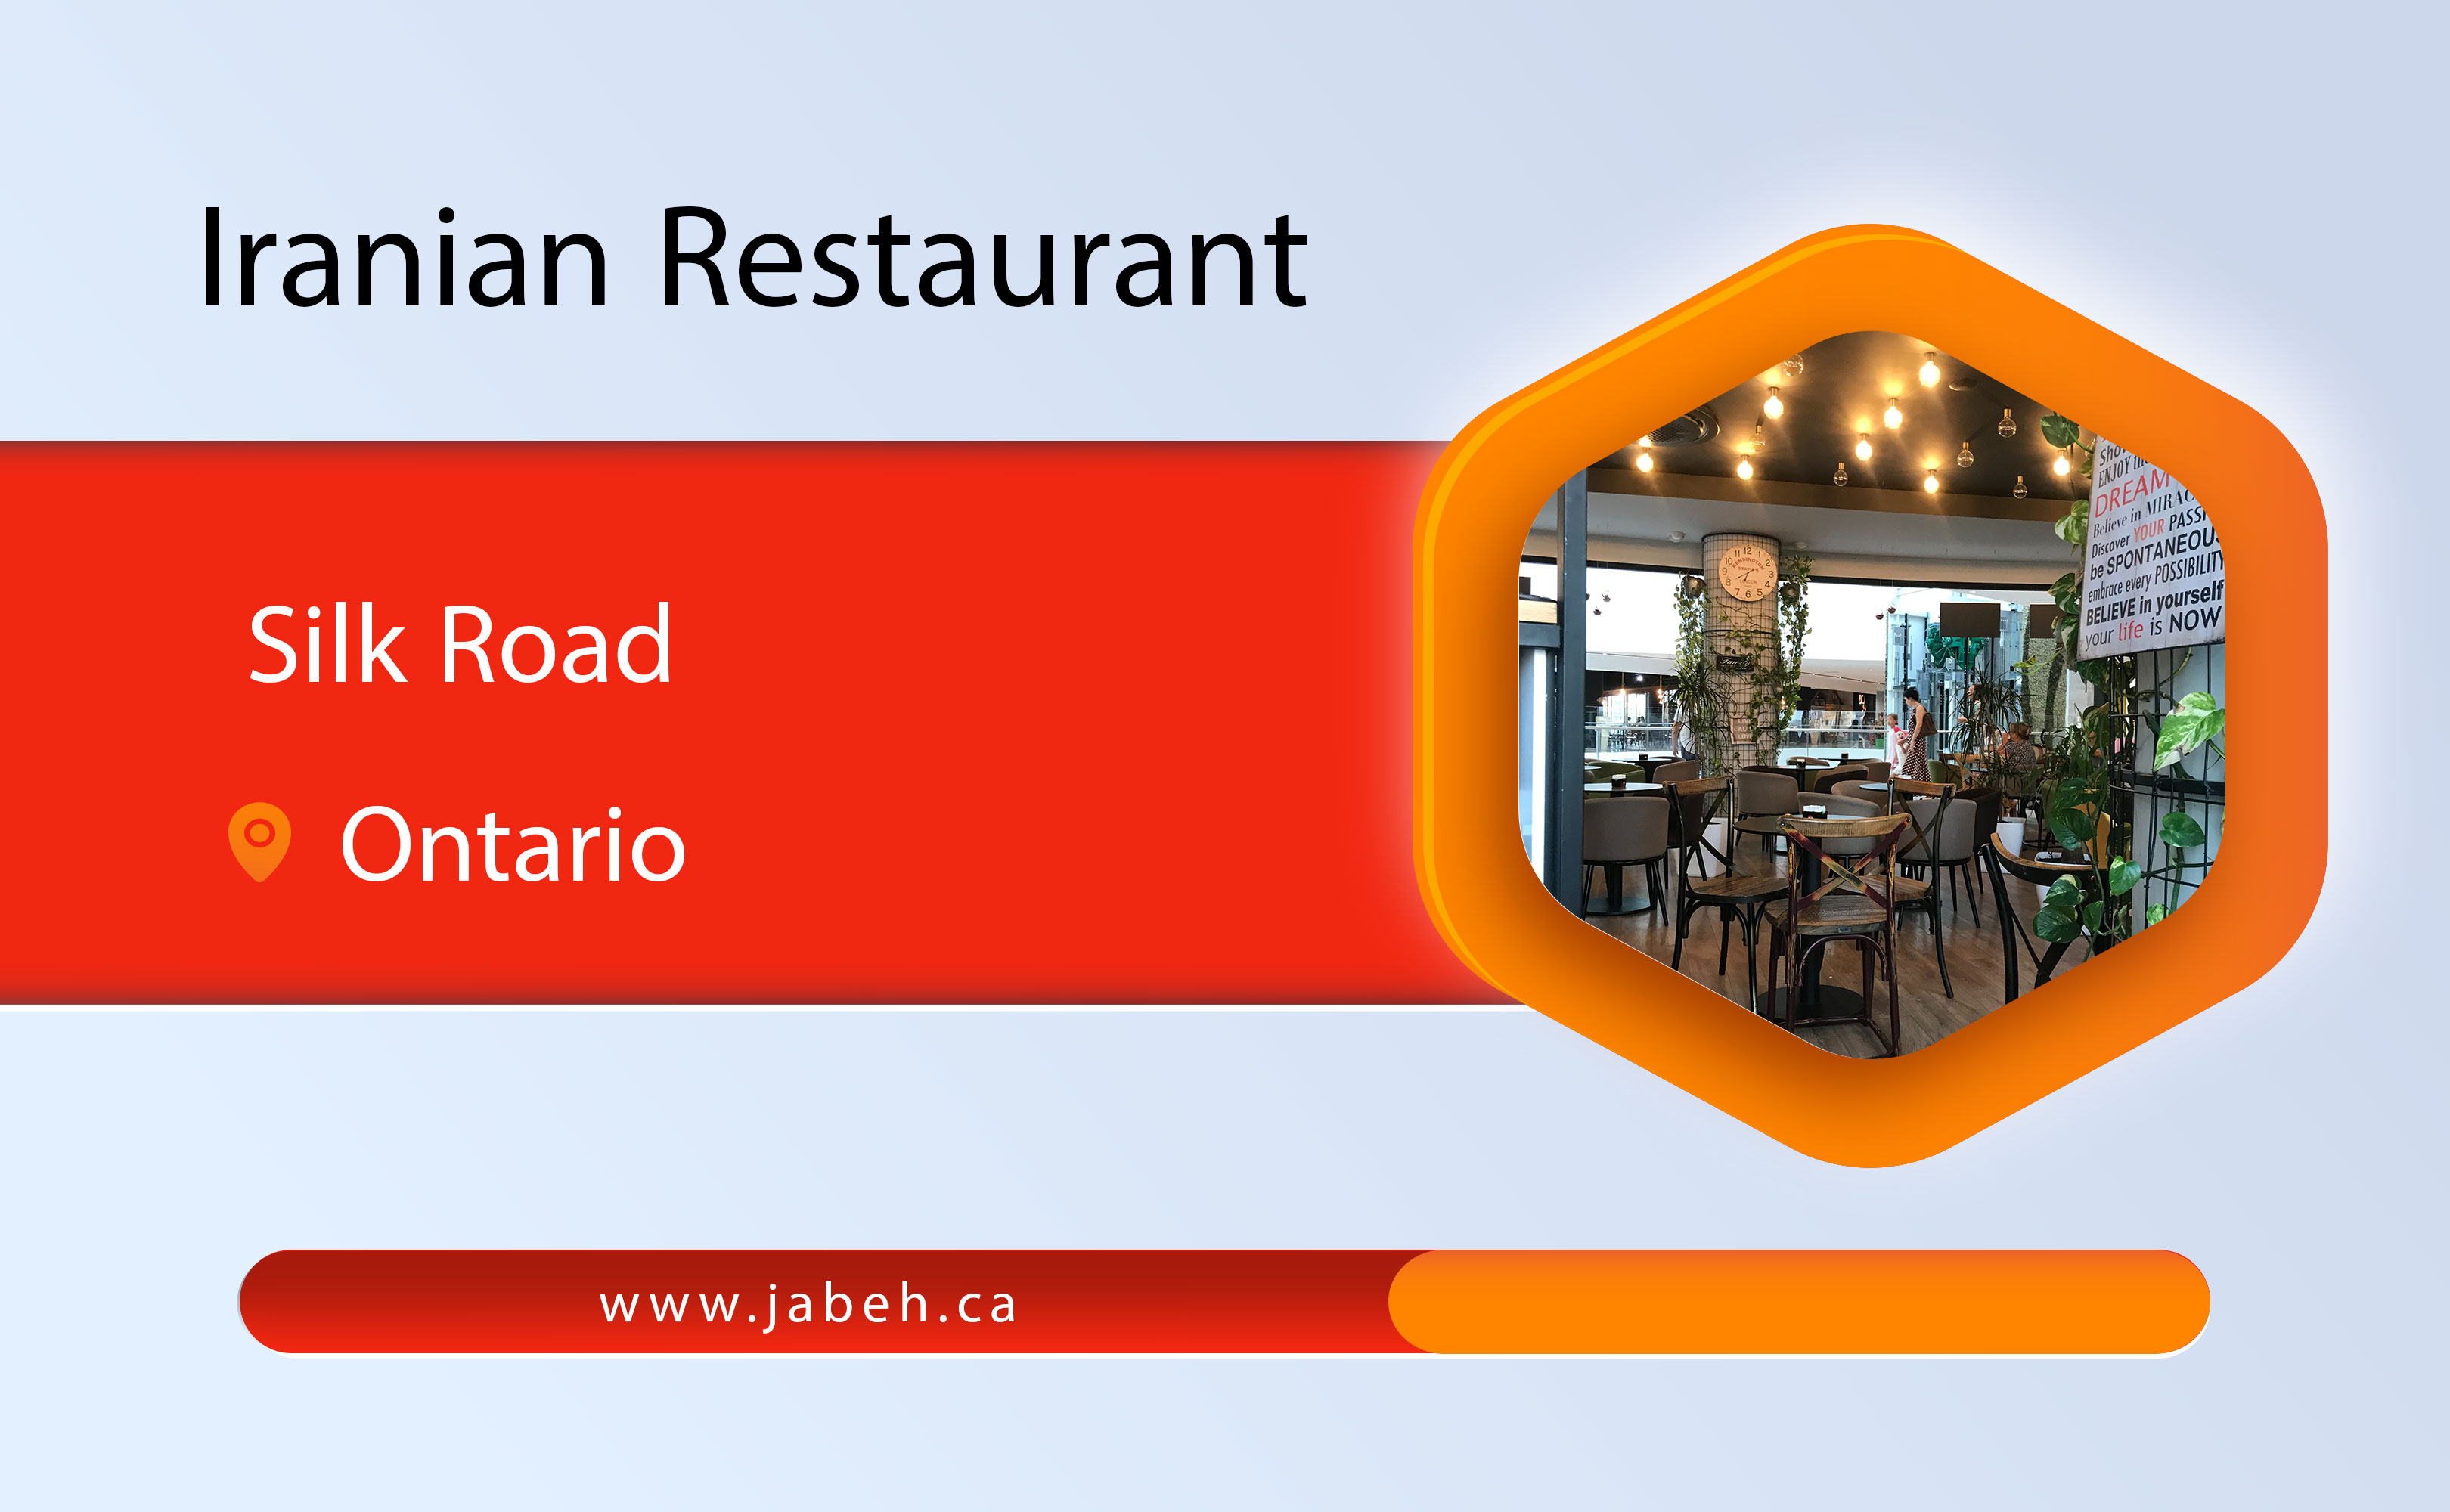 Silk Road Iranian Restaurant in Ontario